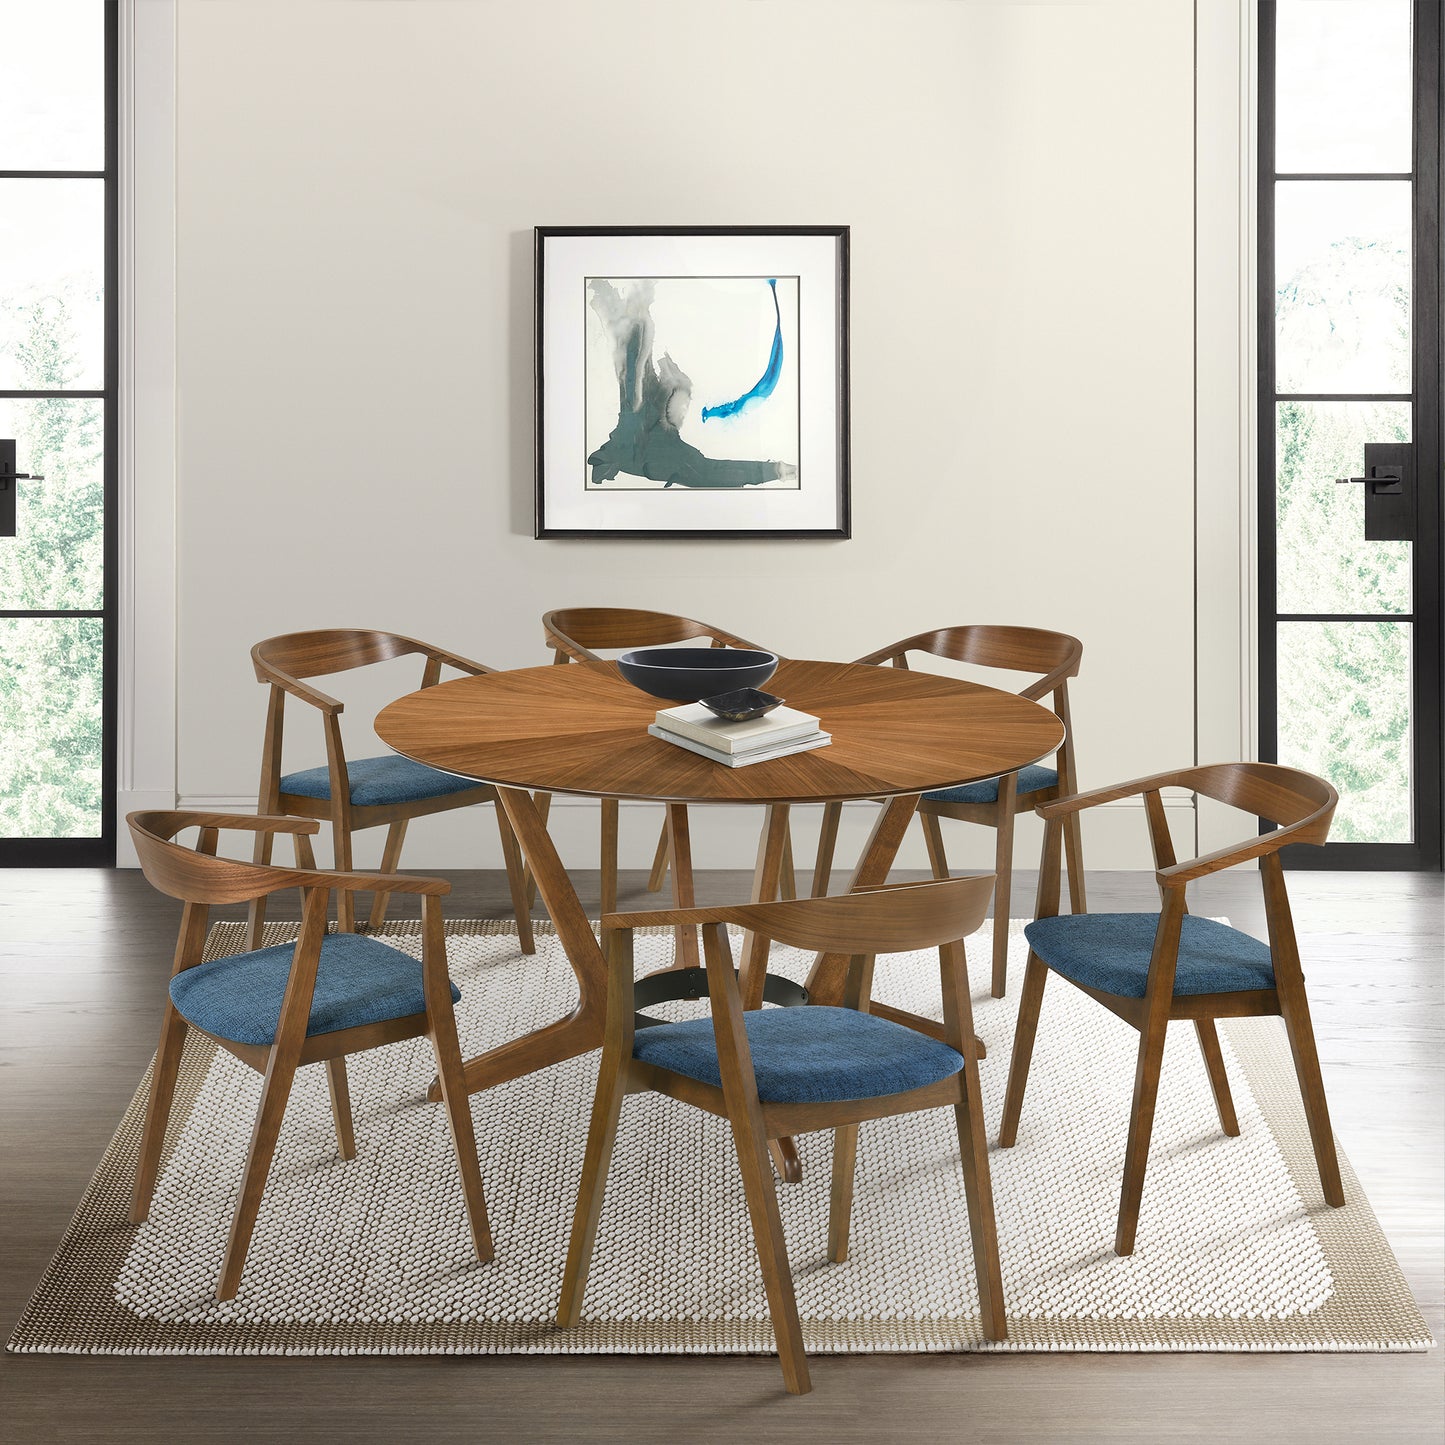 Santana 7 Piece Round Walnut Wood Dining Table Set with Blue Fabric